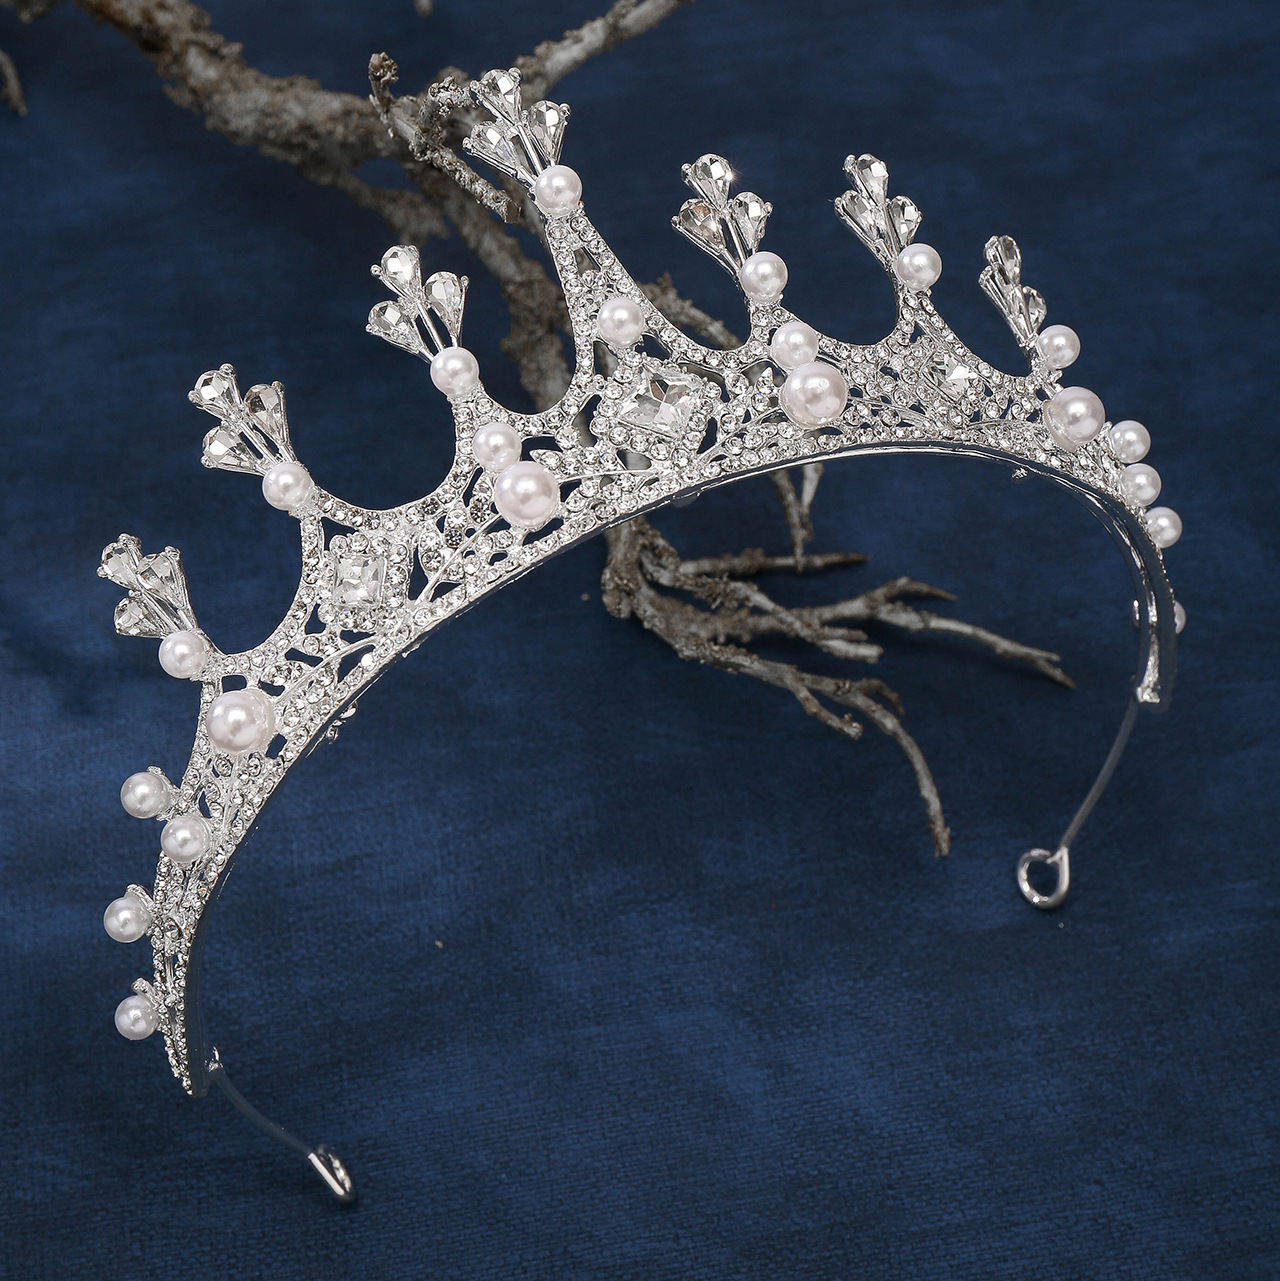 Silver Princess tiara